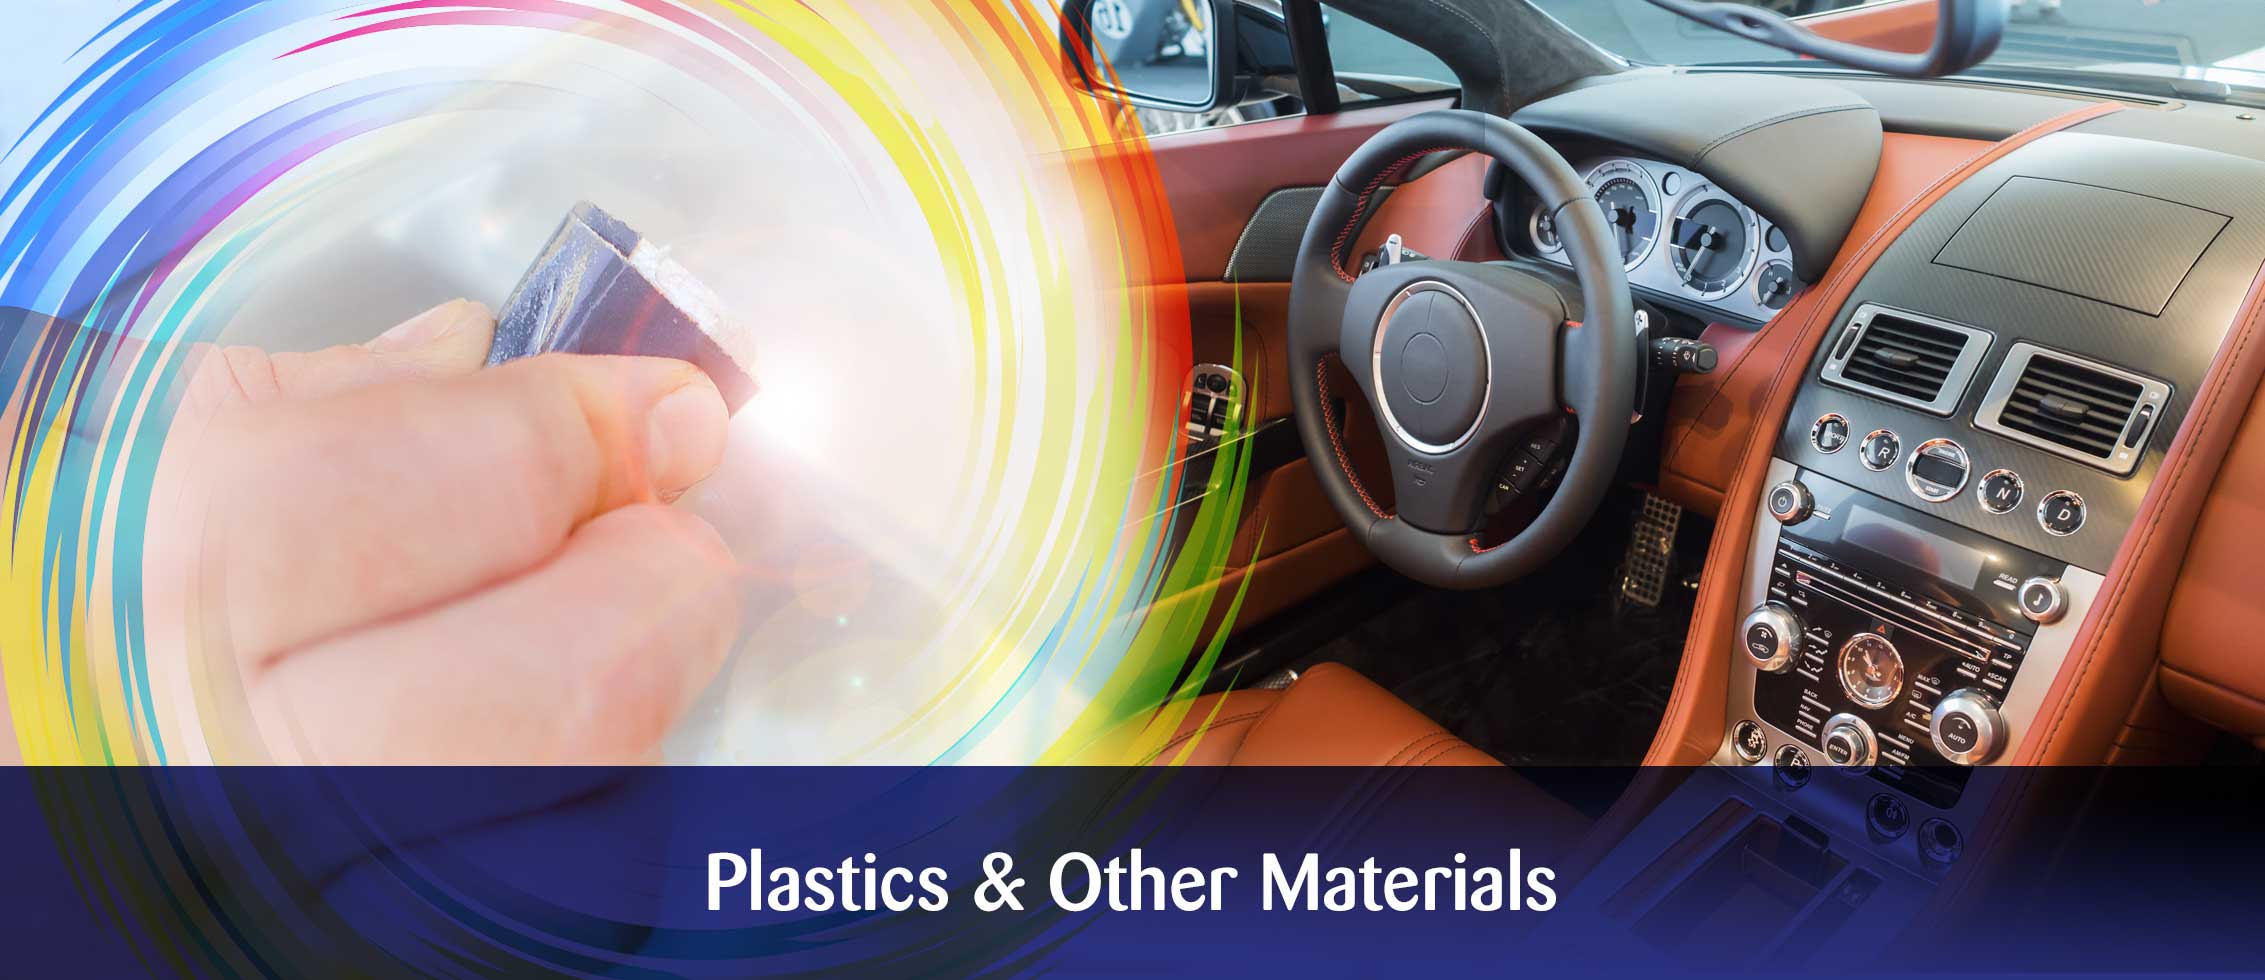 Plastics and Other Materials